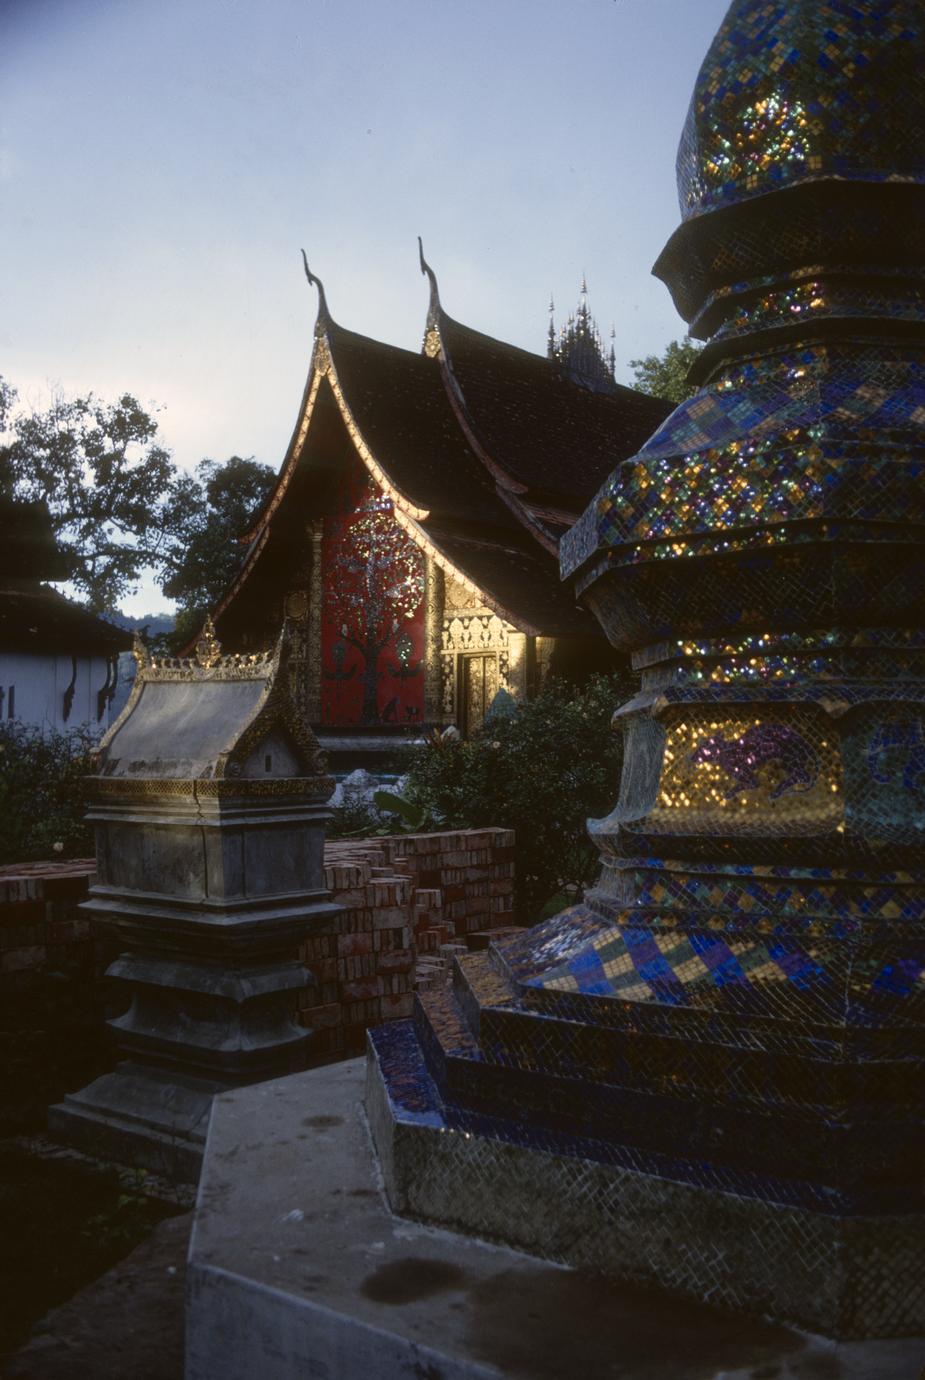 Buddhist temple